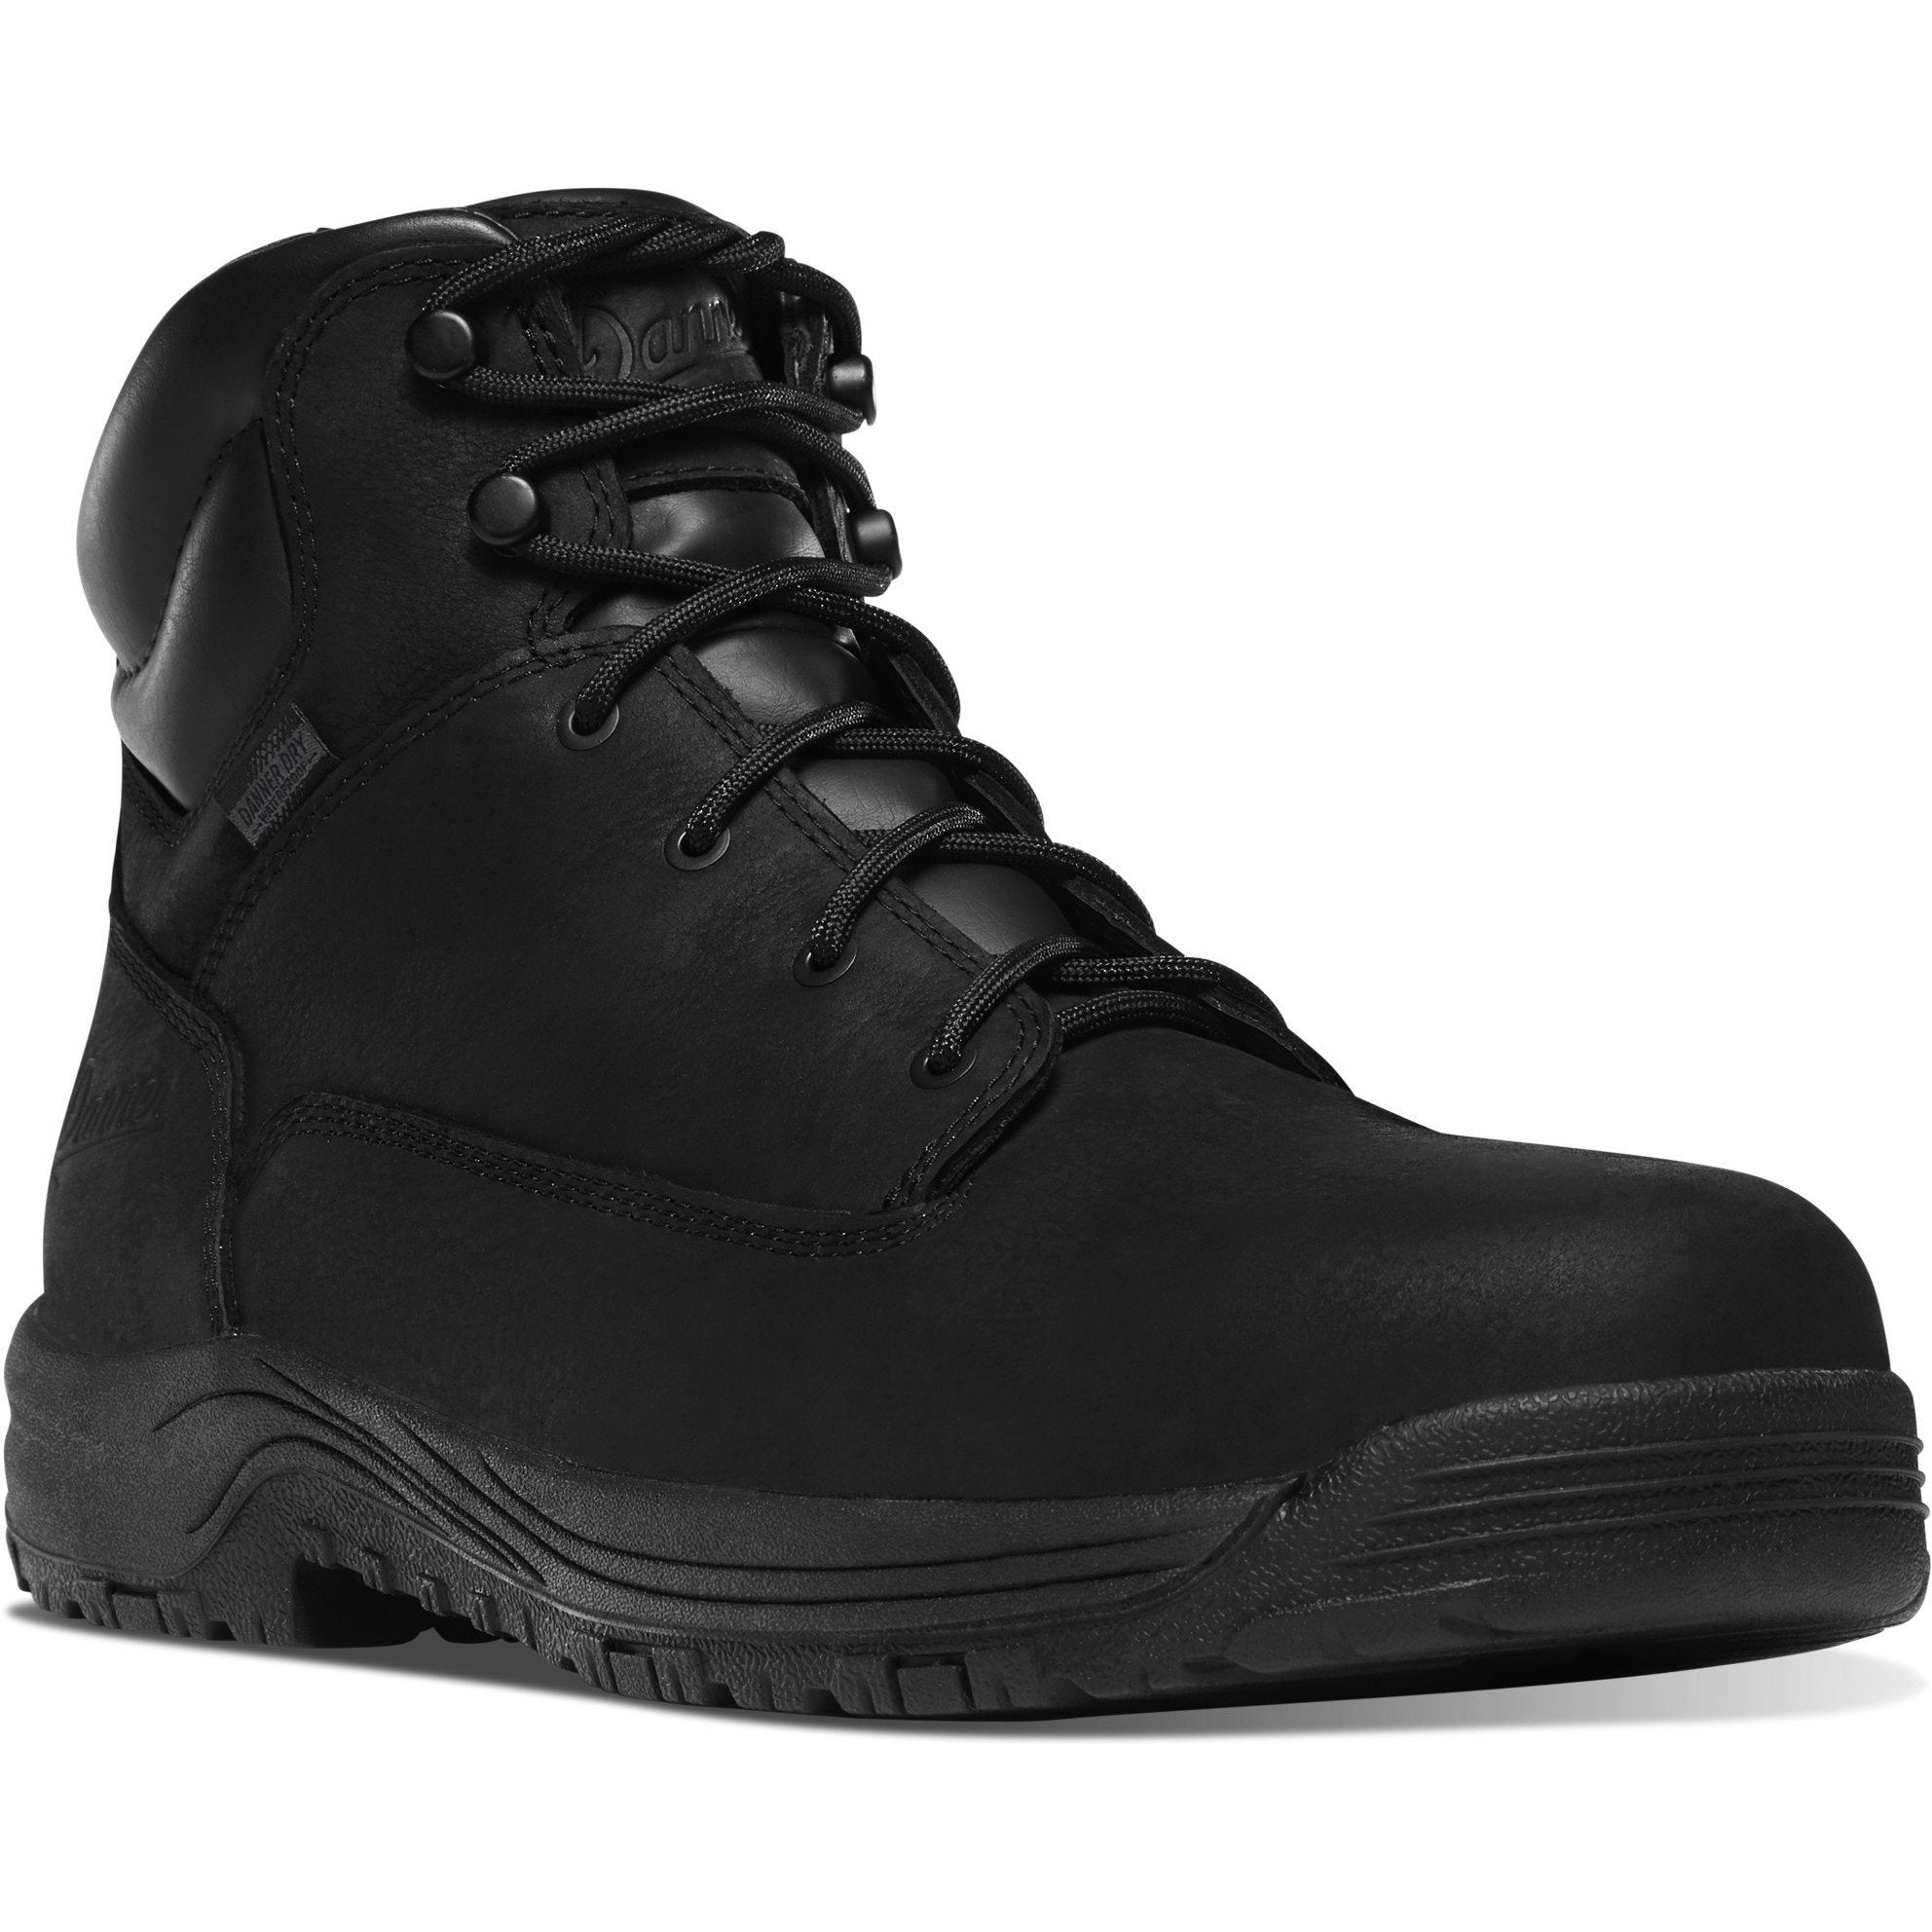 Danner Men's Caliper 6" Aluminum Toe WP Work Boot - Black - 19454 7 / Medium / Black - Overlook Boots